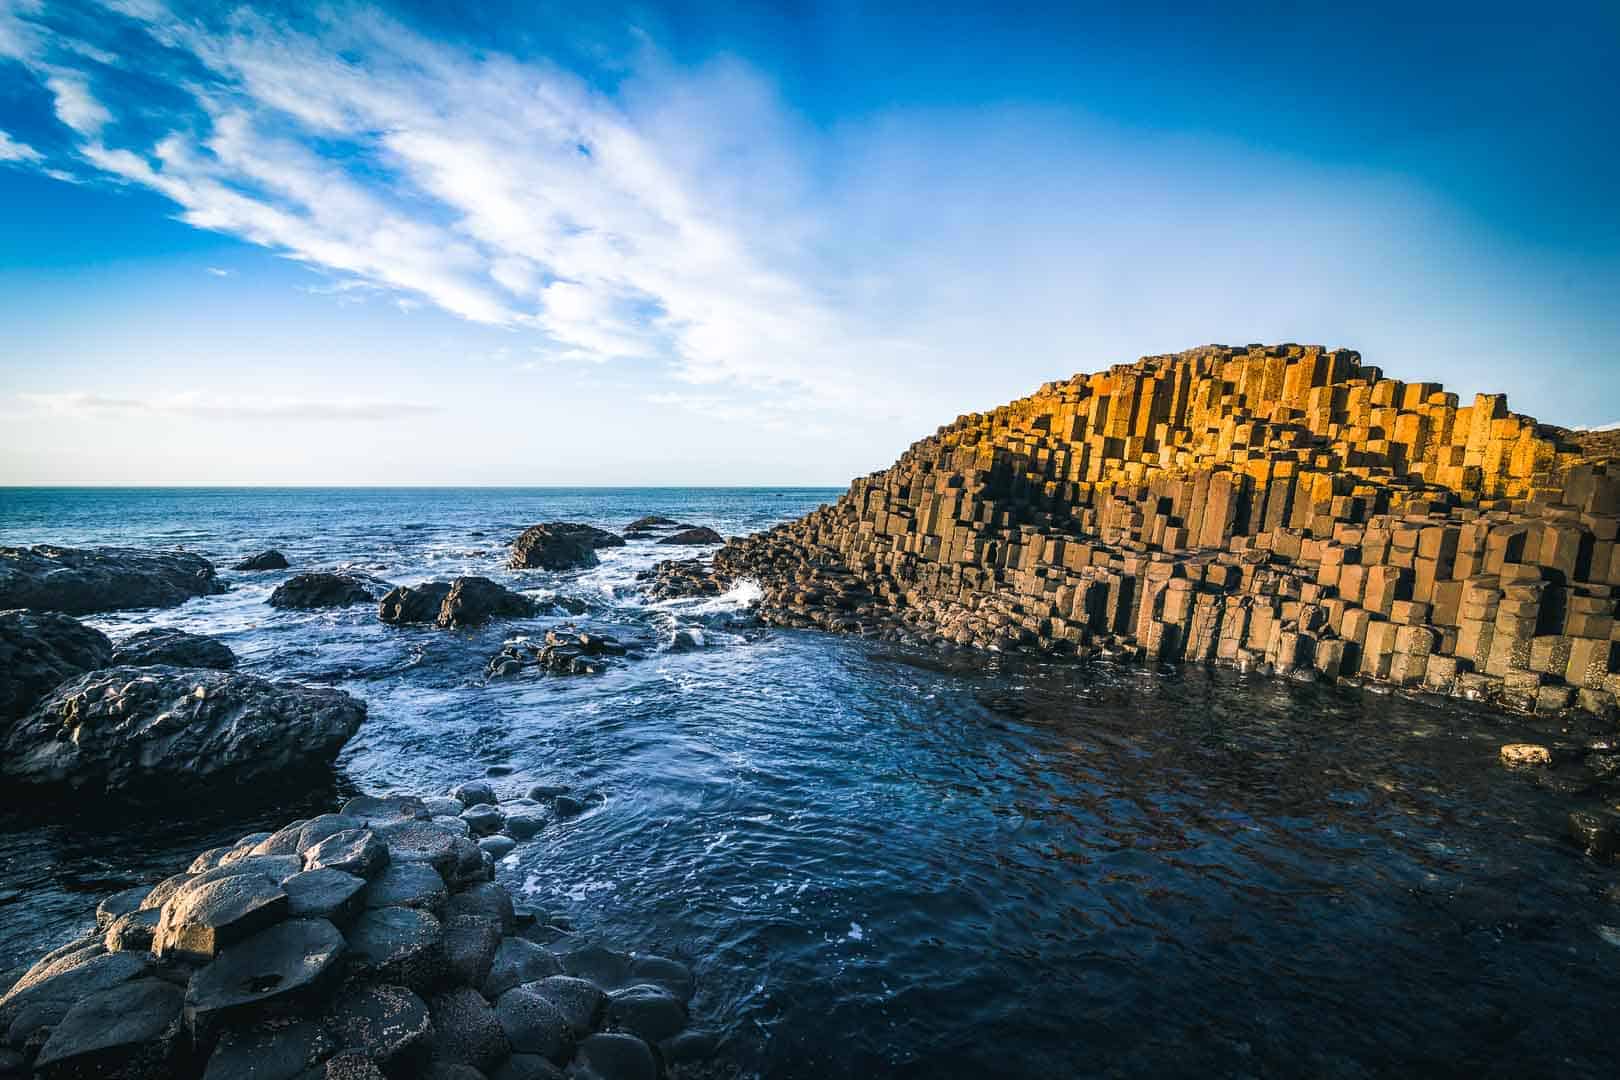 Northern Ireland’s Giant’s Causeway